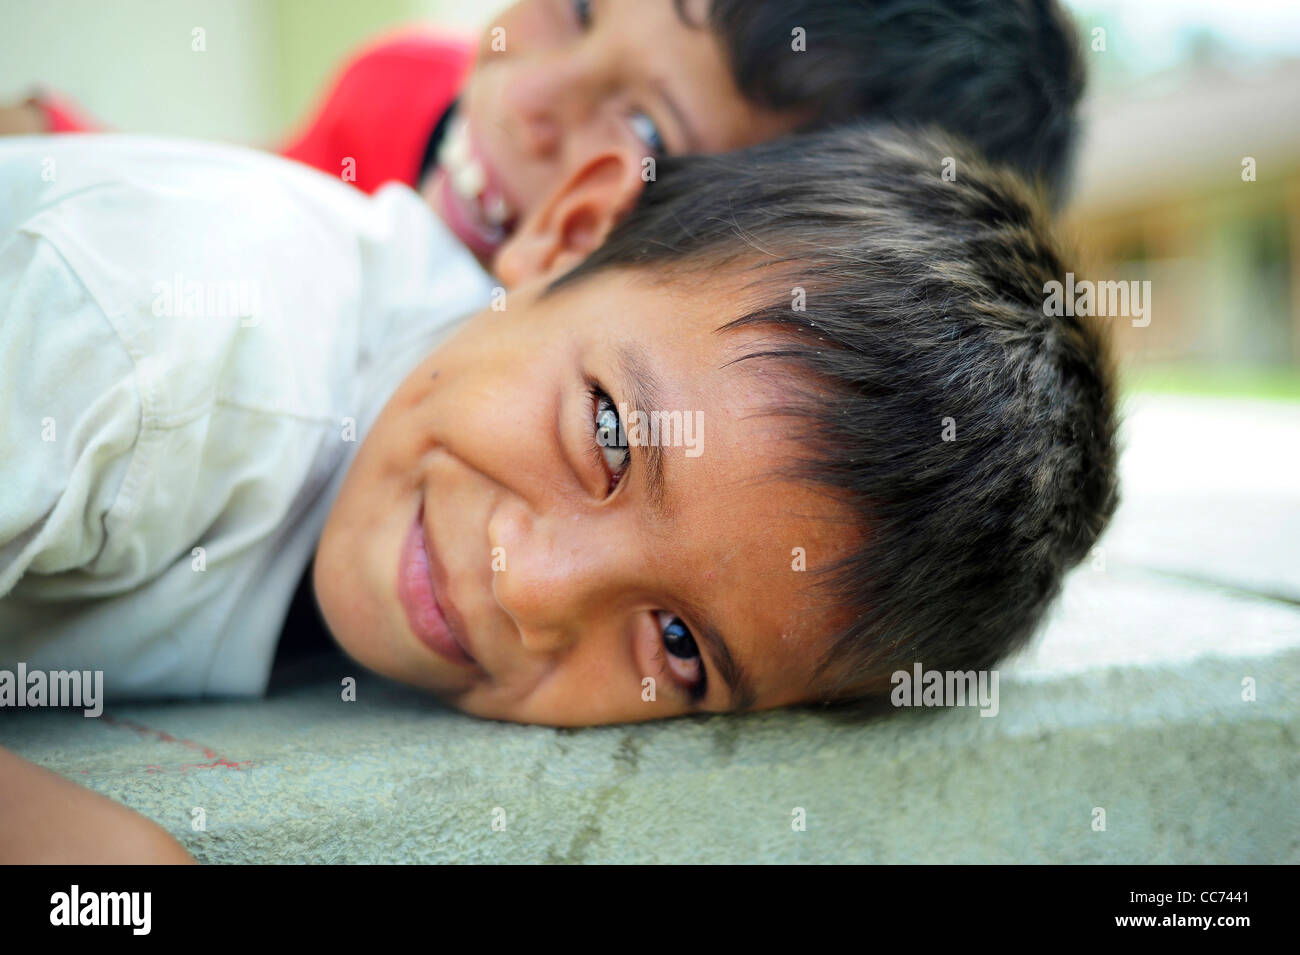 Indonesia, Sumatra, Banda Aceh, portrait of two young boys smiling Stock Photo